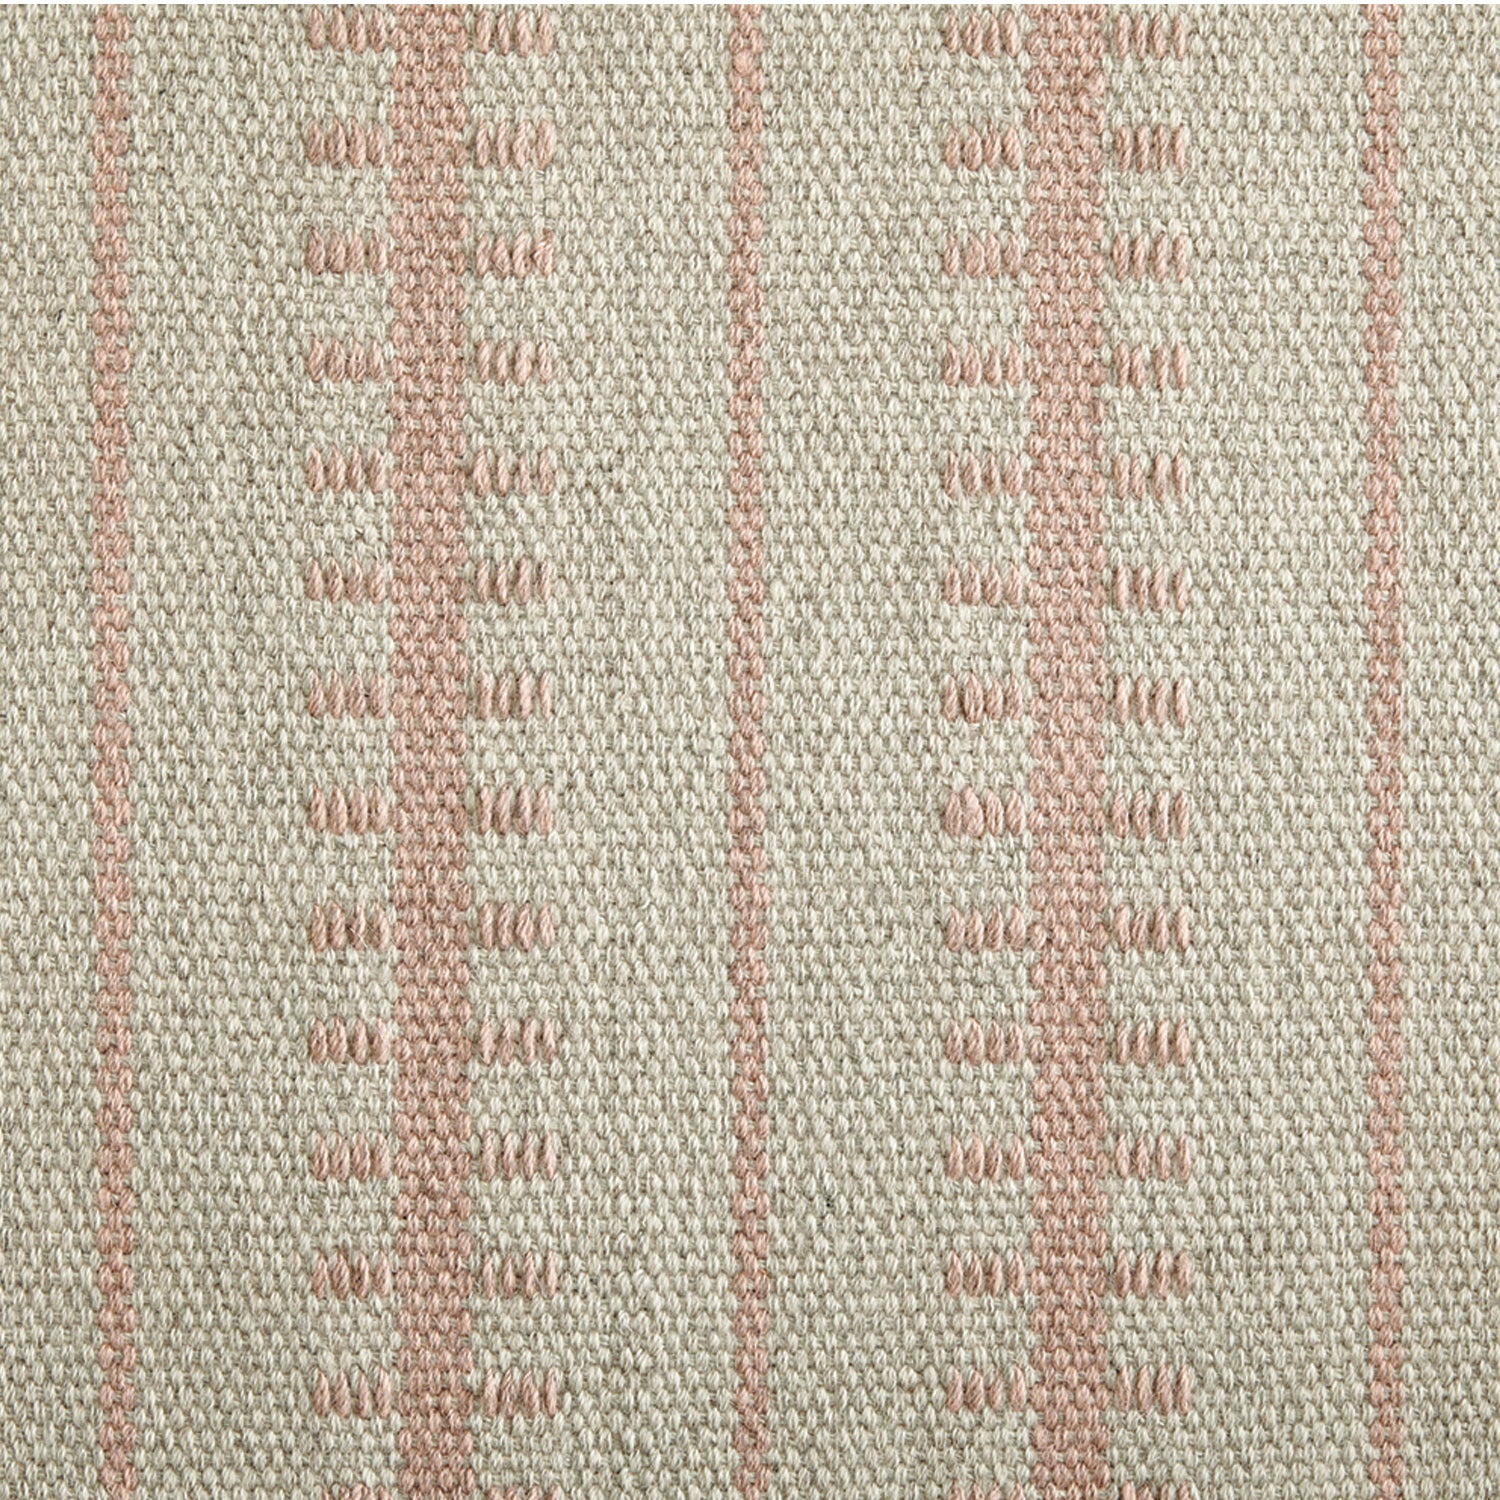 Wool broadloom carpet swatch in a ticked stripe weave in light pink and cream.